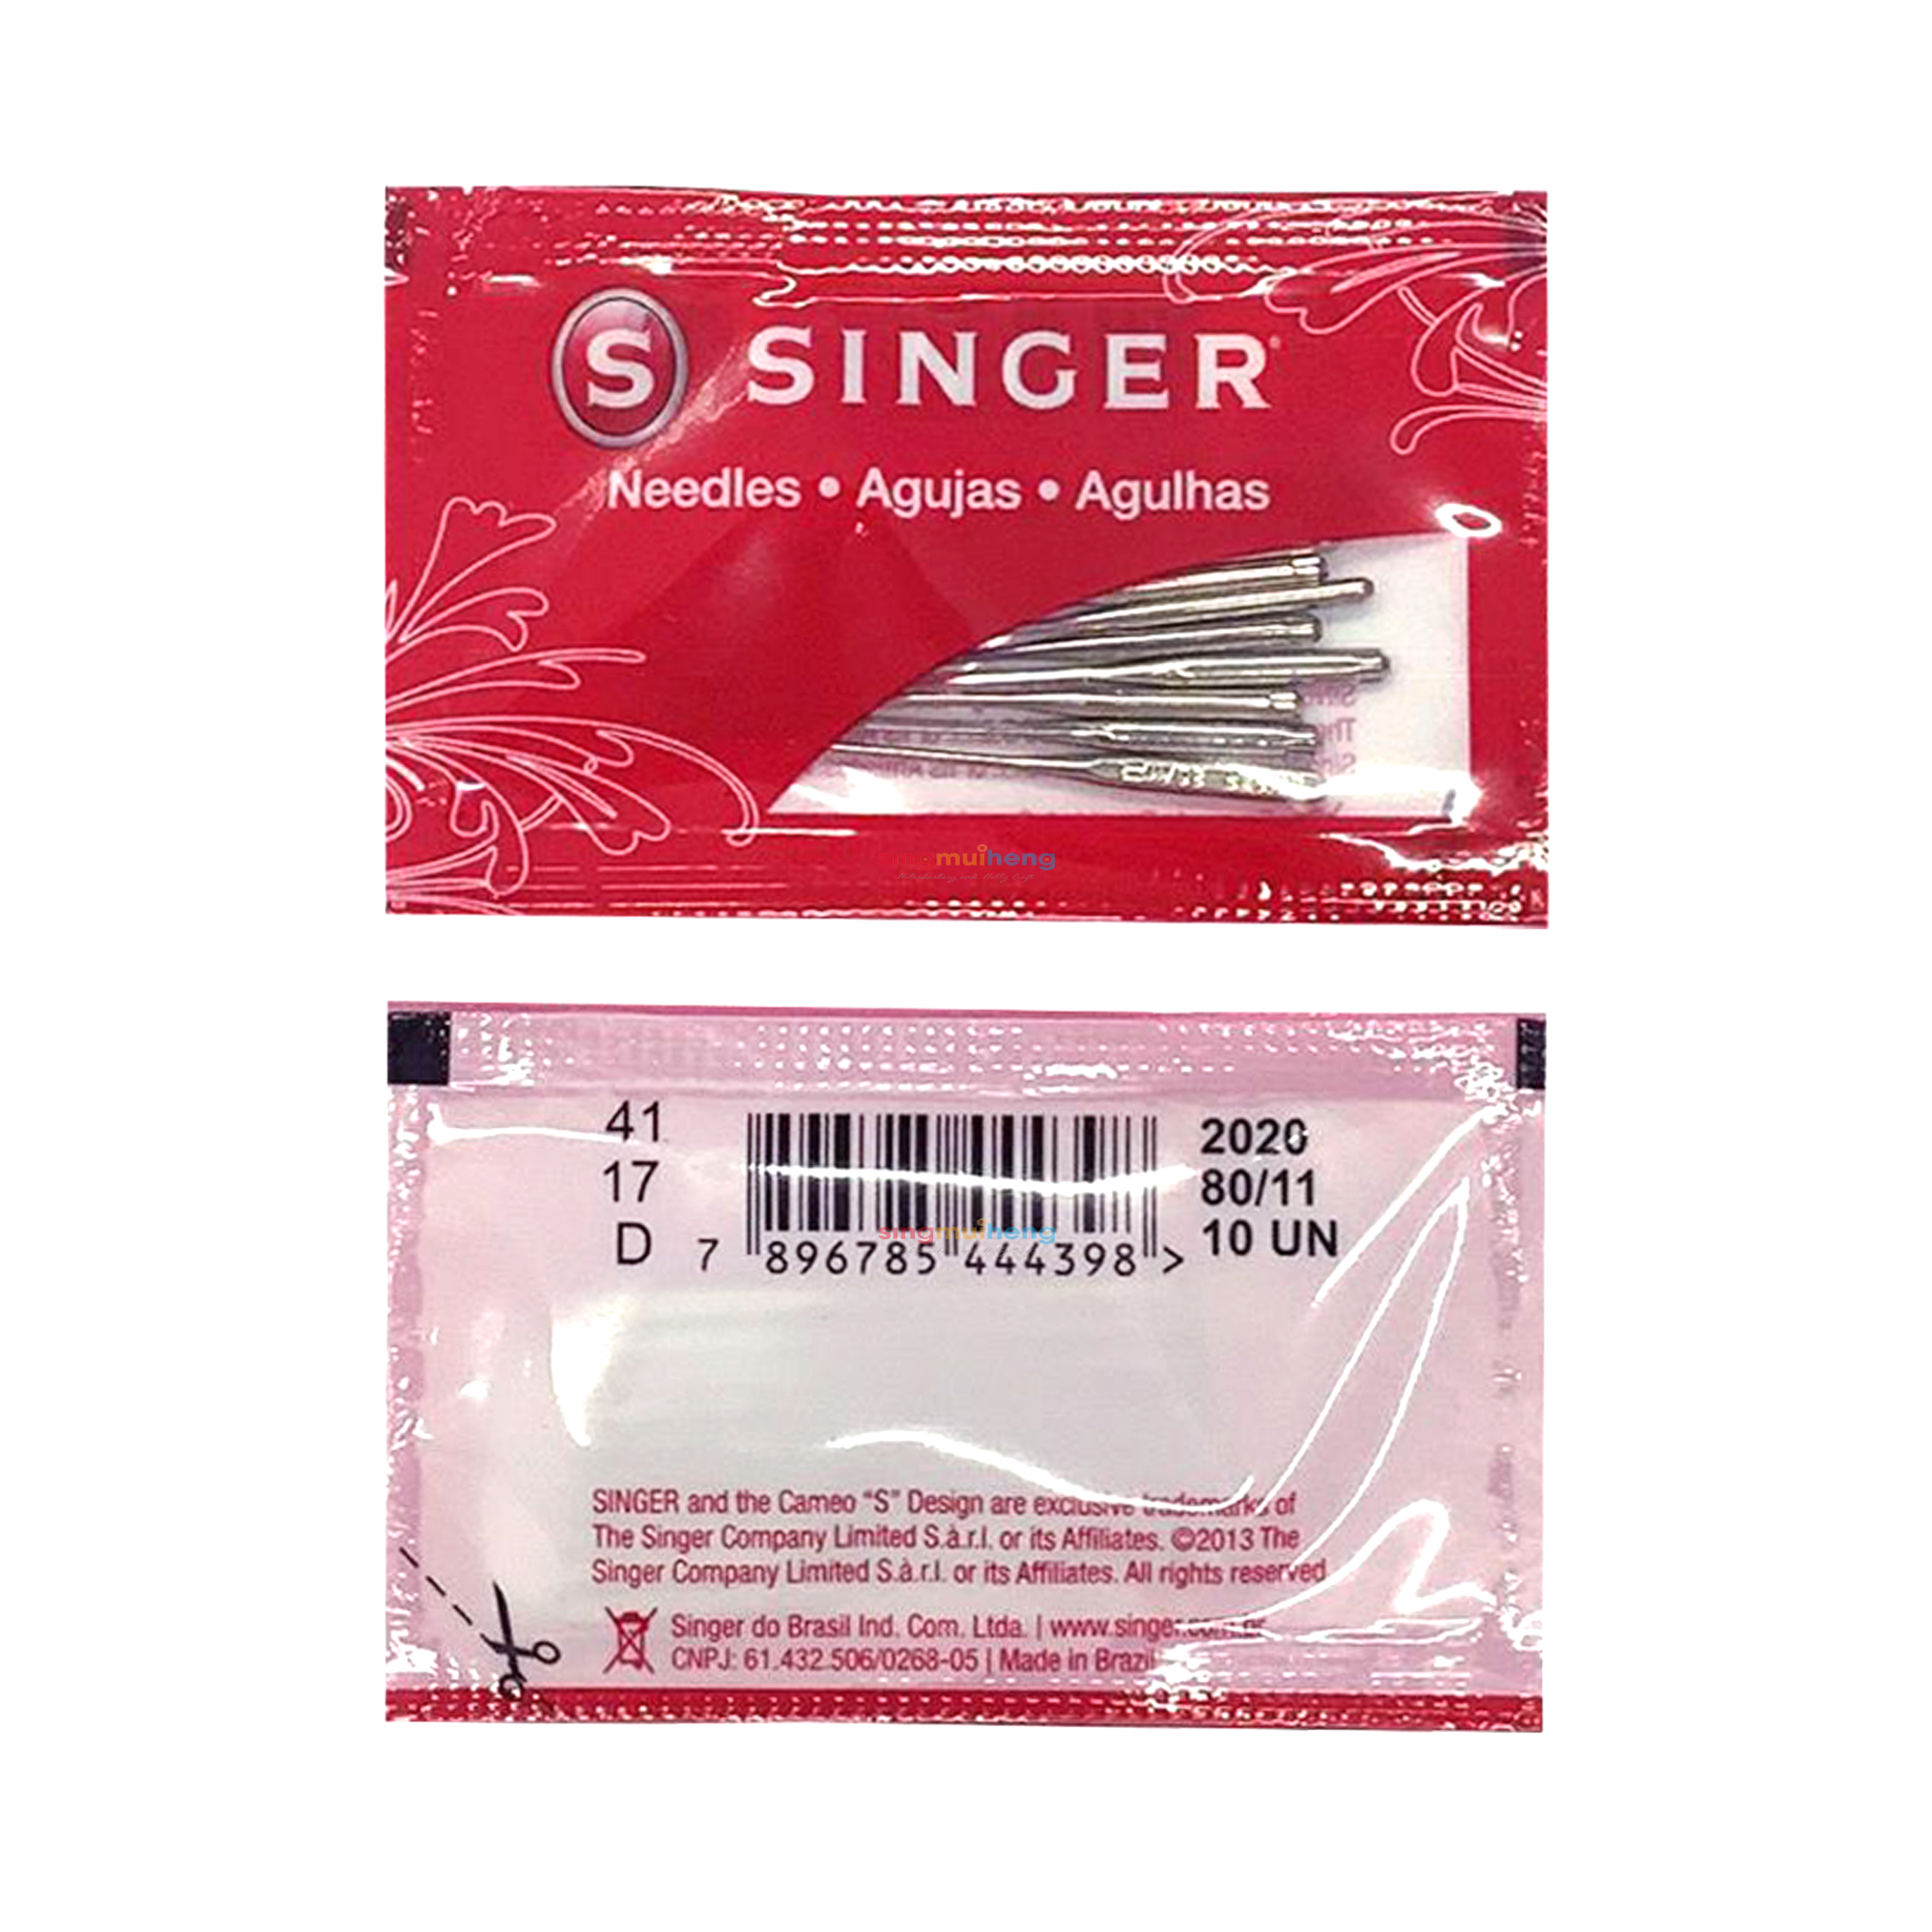 Singer Sewing Needles